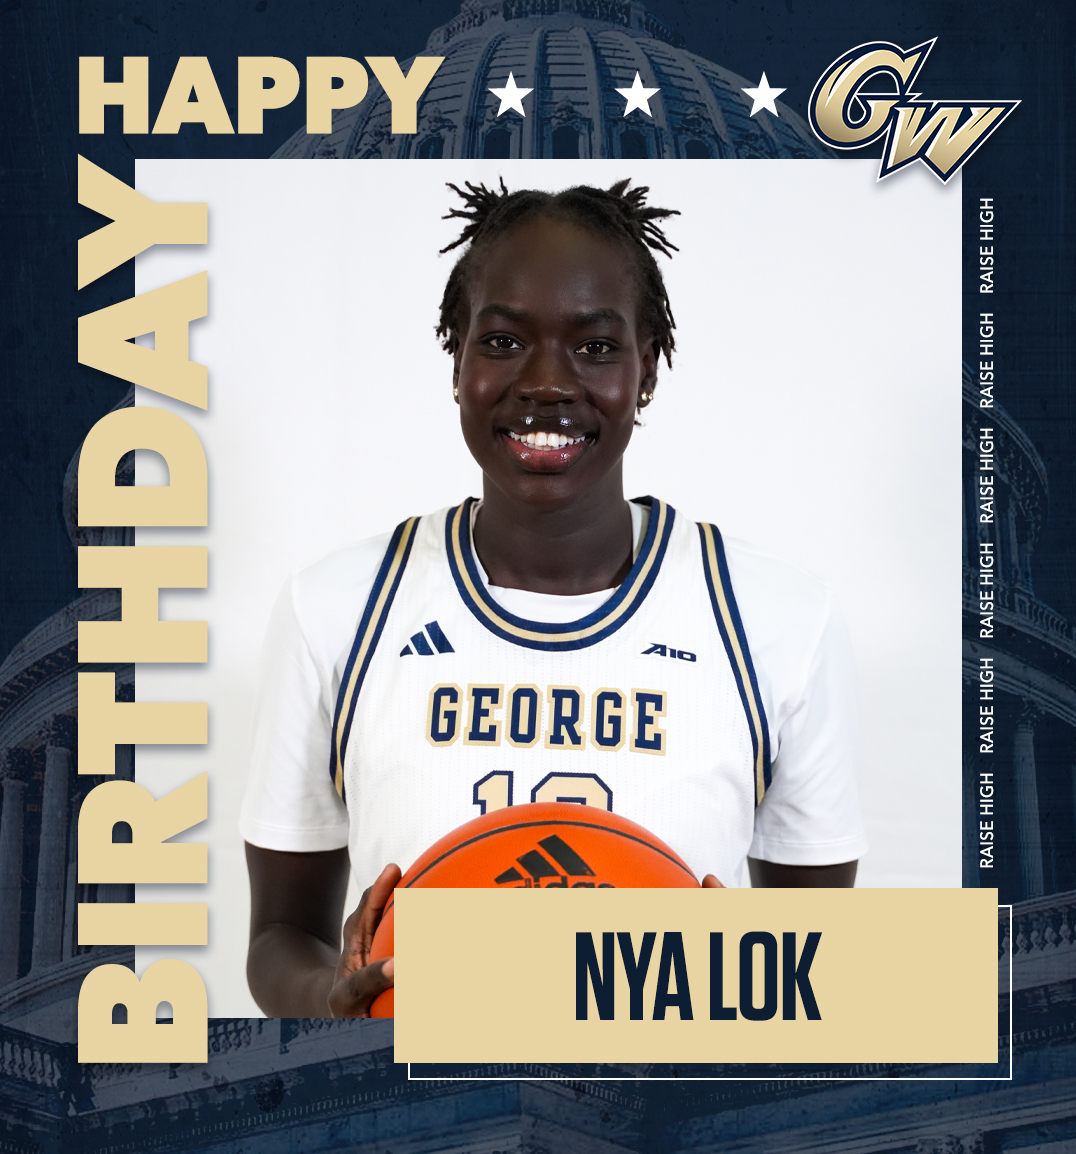 Wishing a big happy birthday to graduate student Nya Lok! 🎂🎉 #RaiseHigh